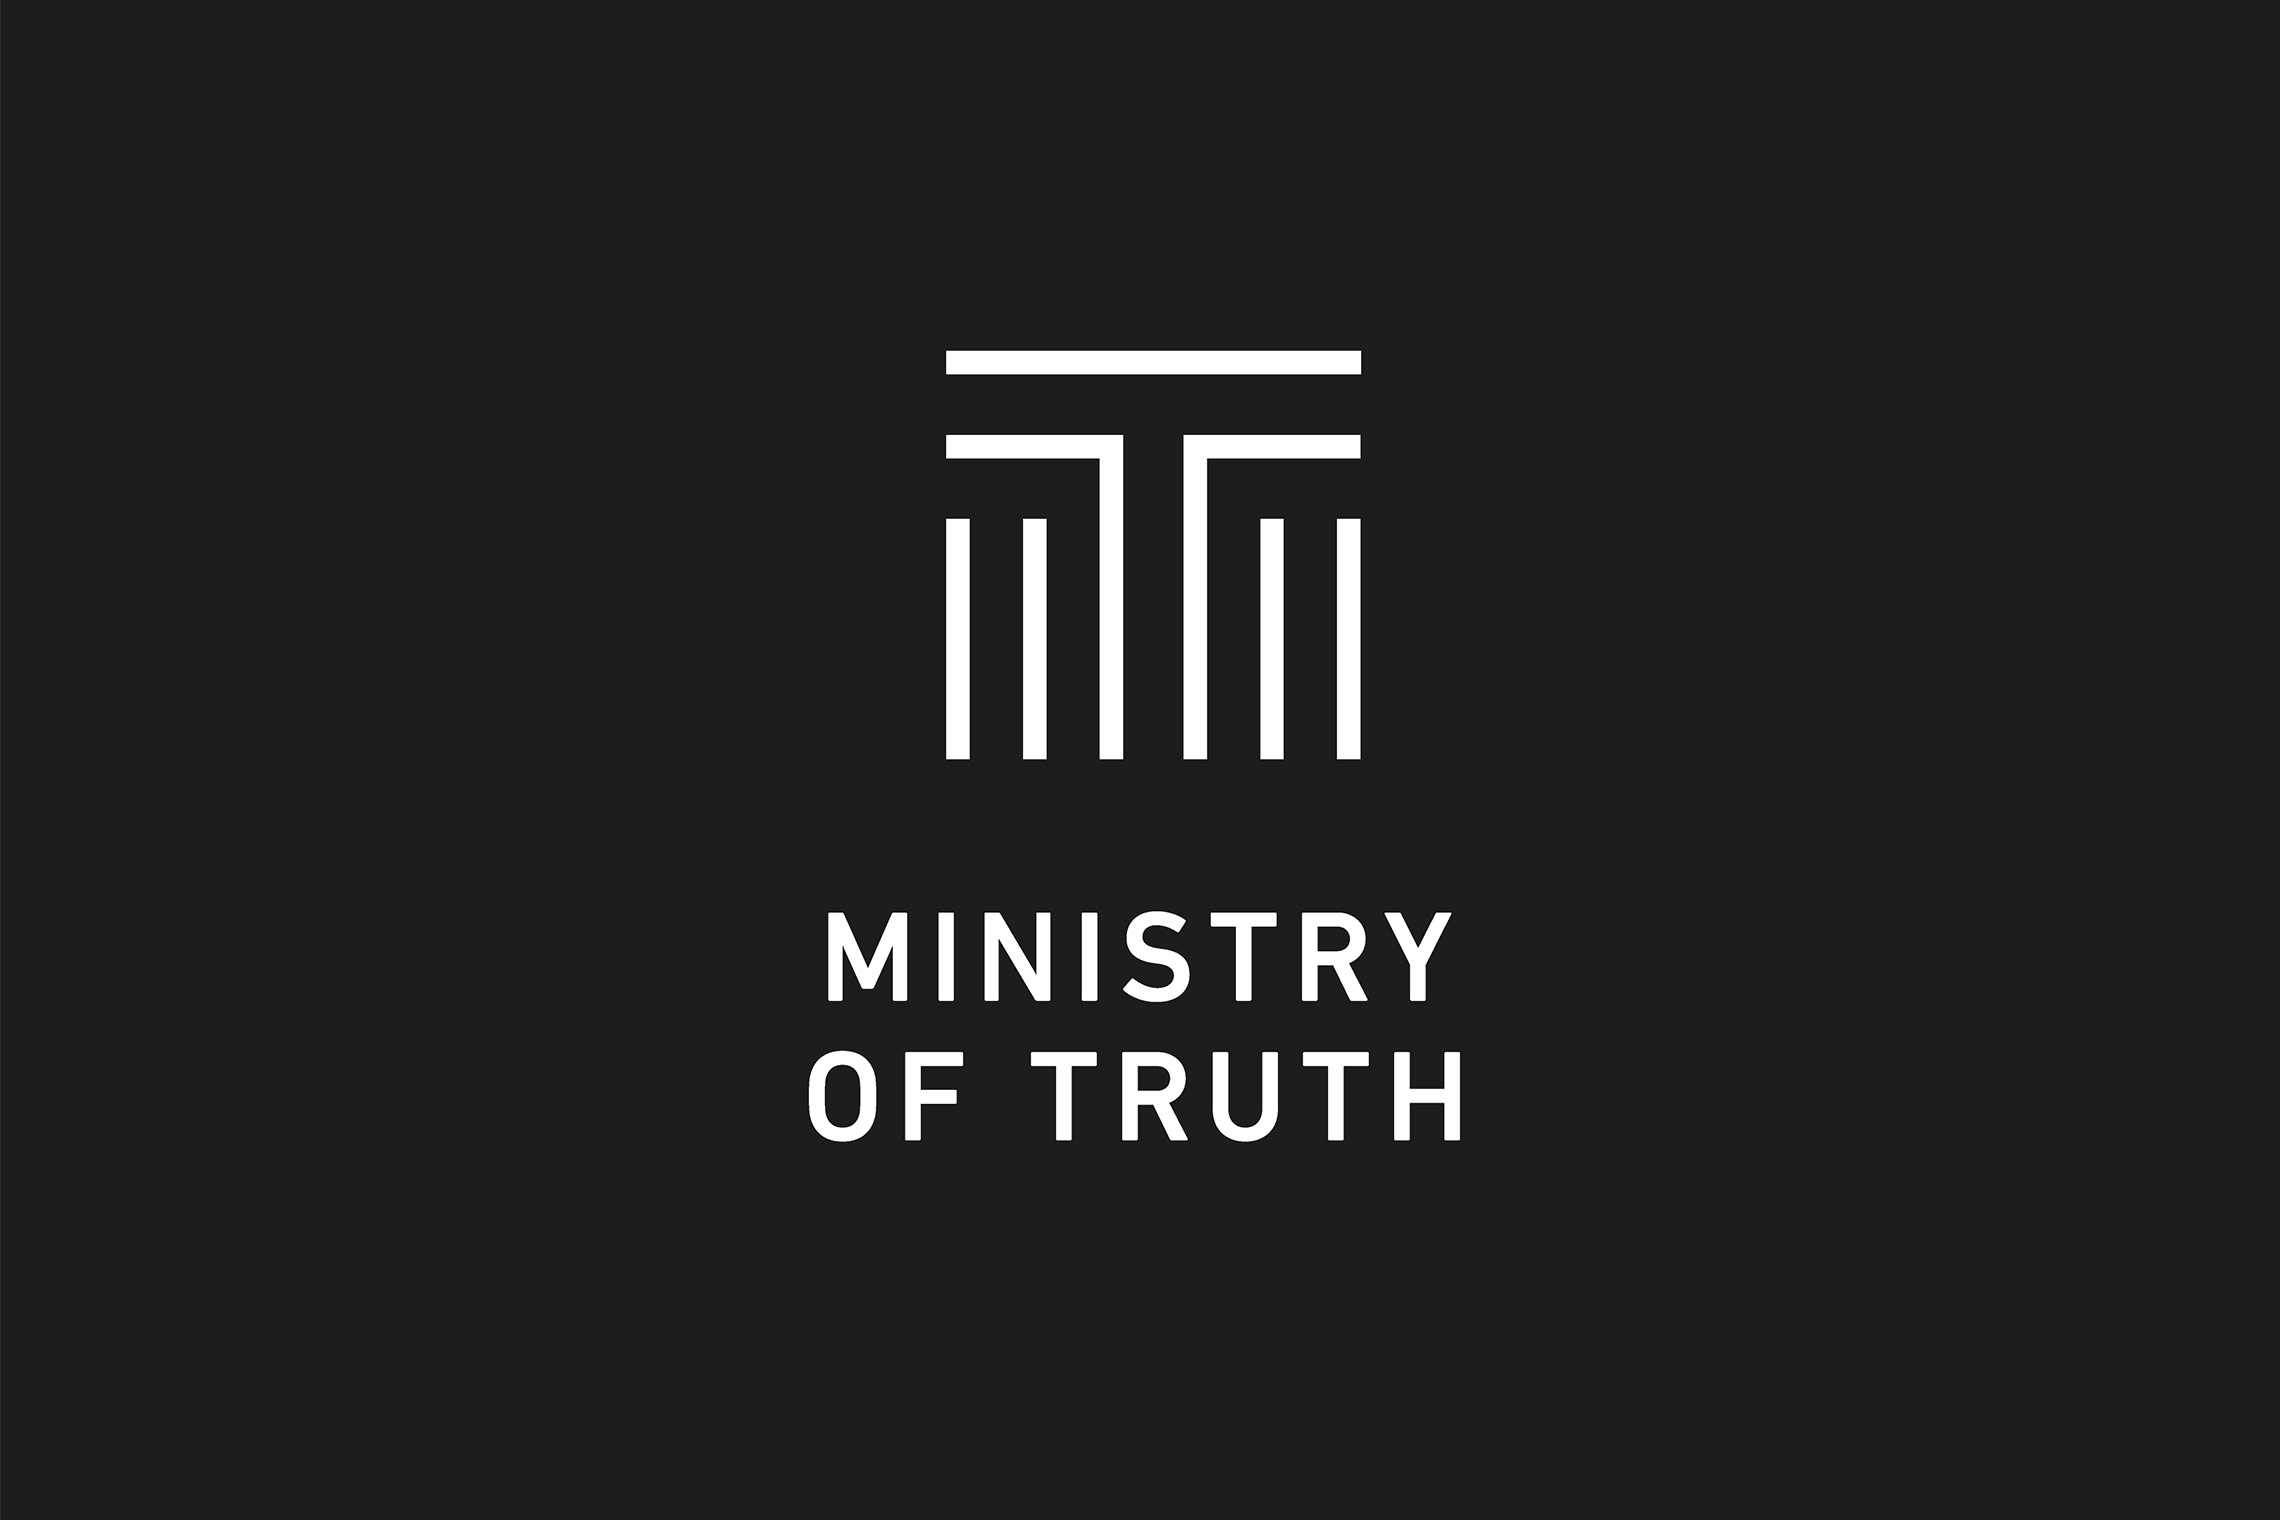 Ministry of truth logo | Made by Miranda | © Miranda Thorne | madebymiranda.co.uk